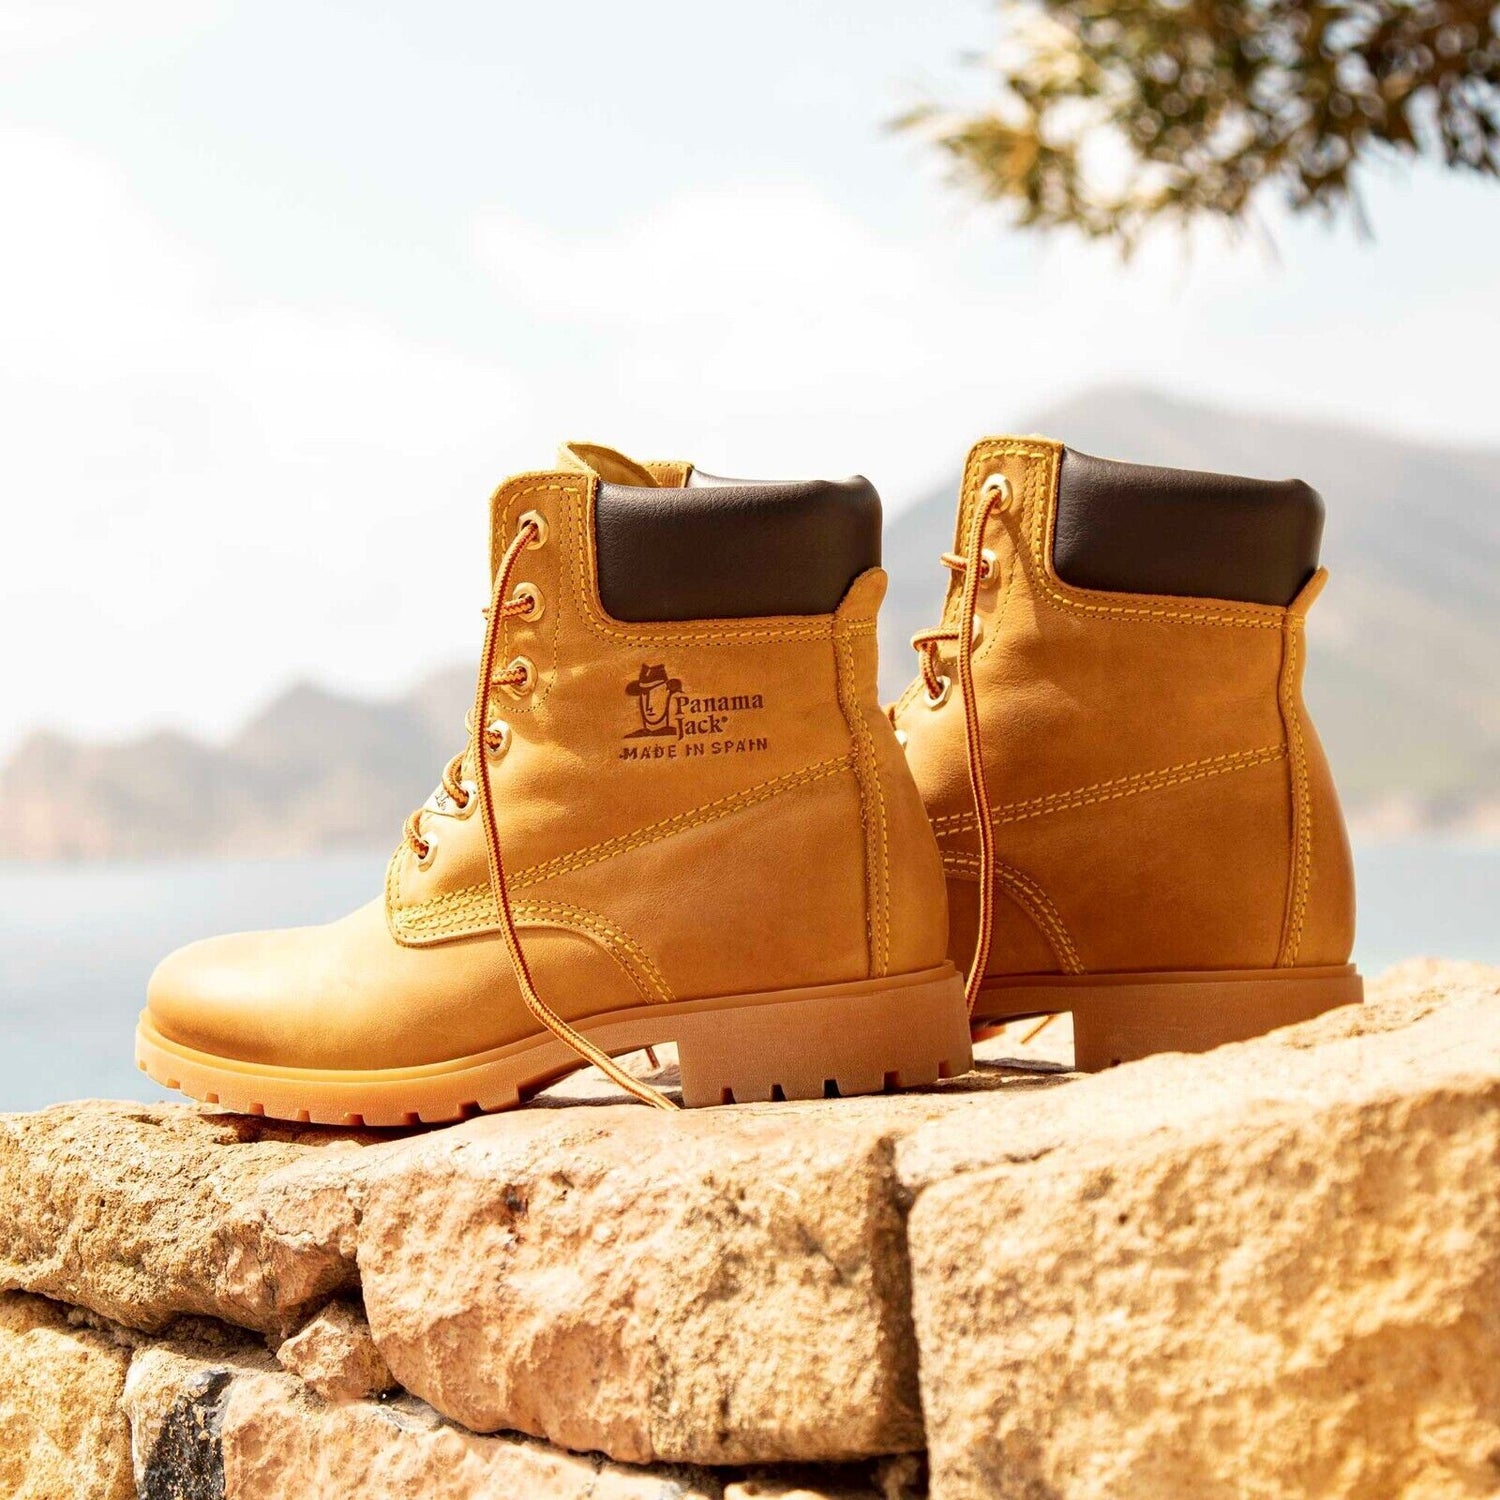 Panama Jack Womens 03 B1 Tan Boots Waterproof Leather Laces Hiking Ankle Chukka - Upperclass Fashions 